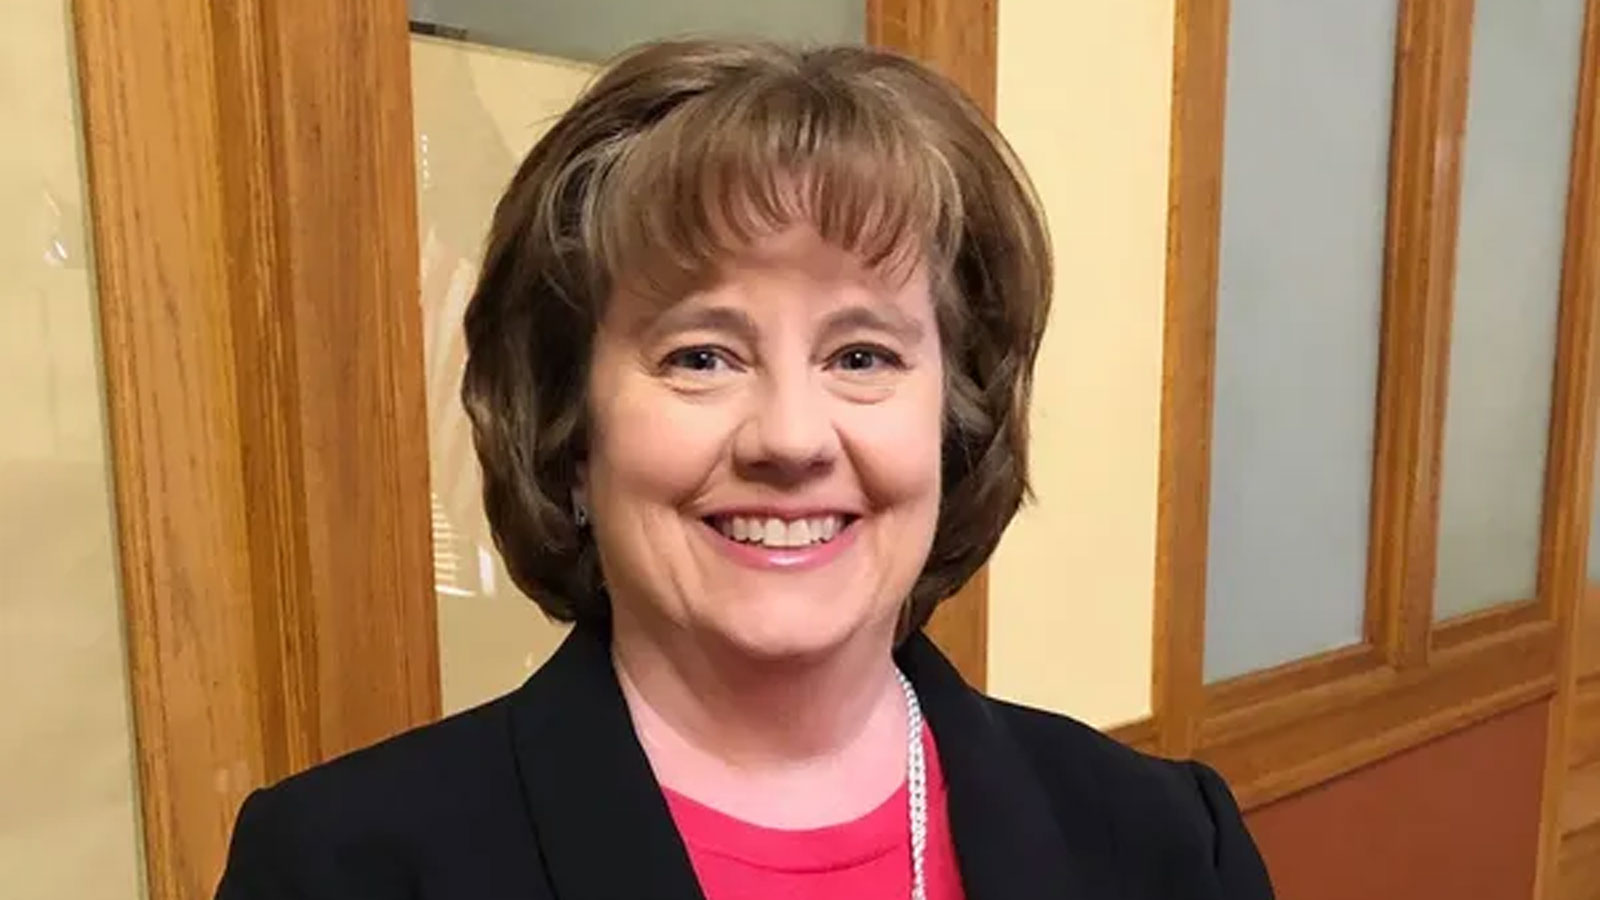 Rachel Mitchell, Maricopa County Attorney